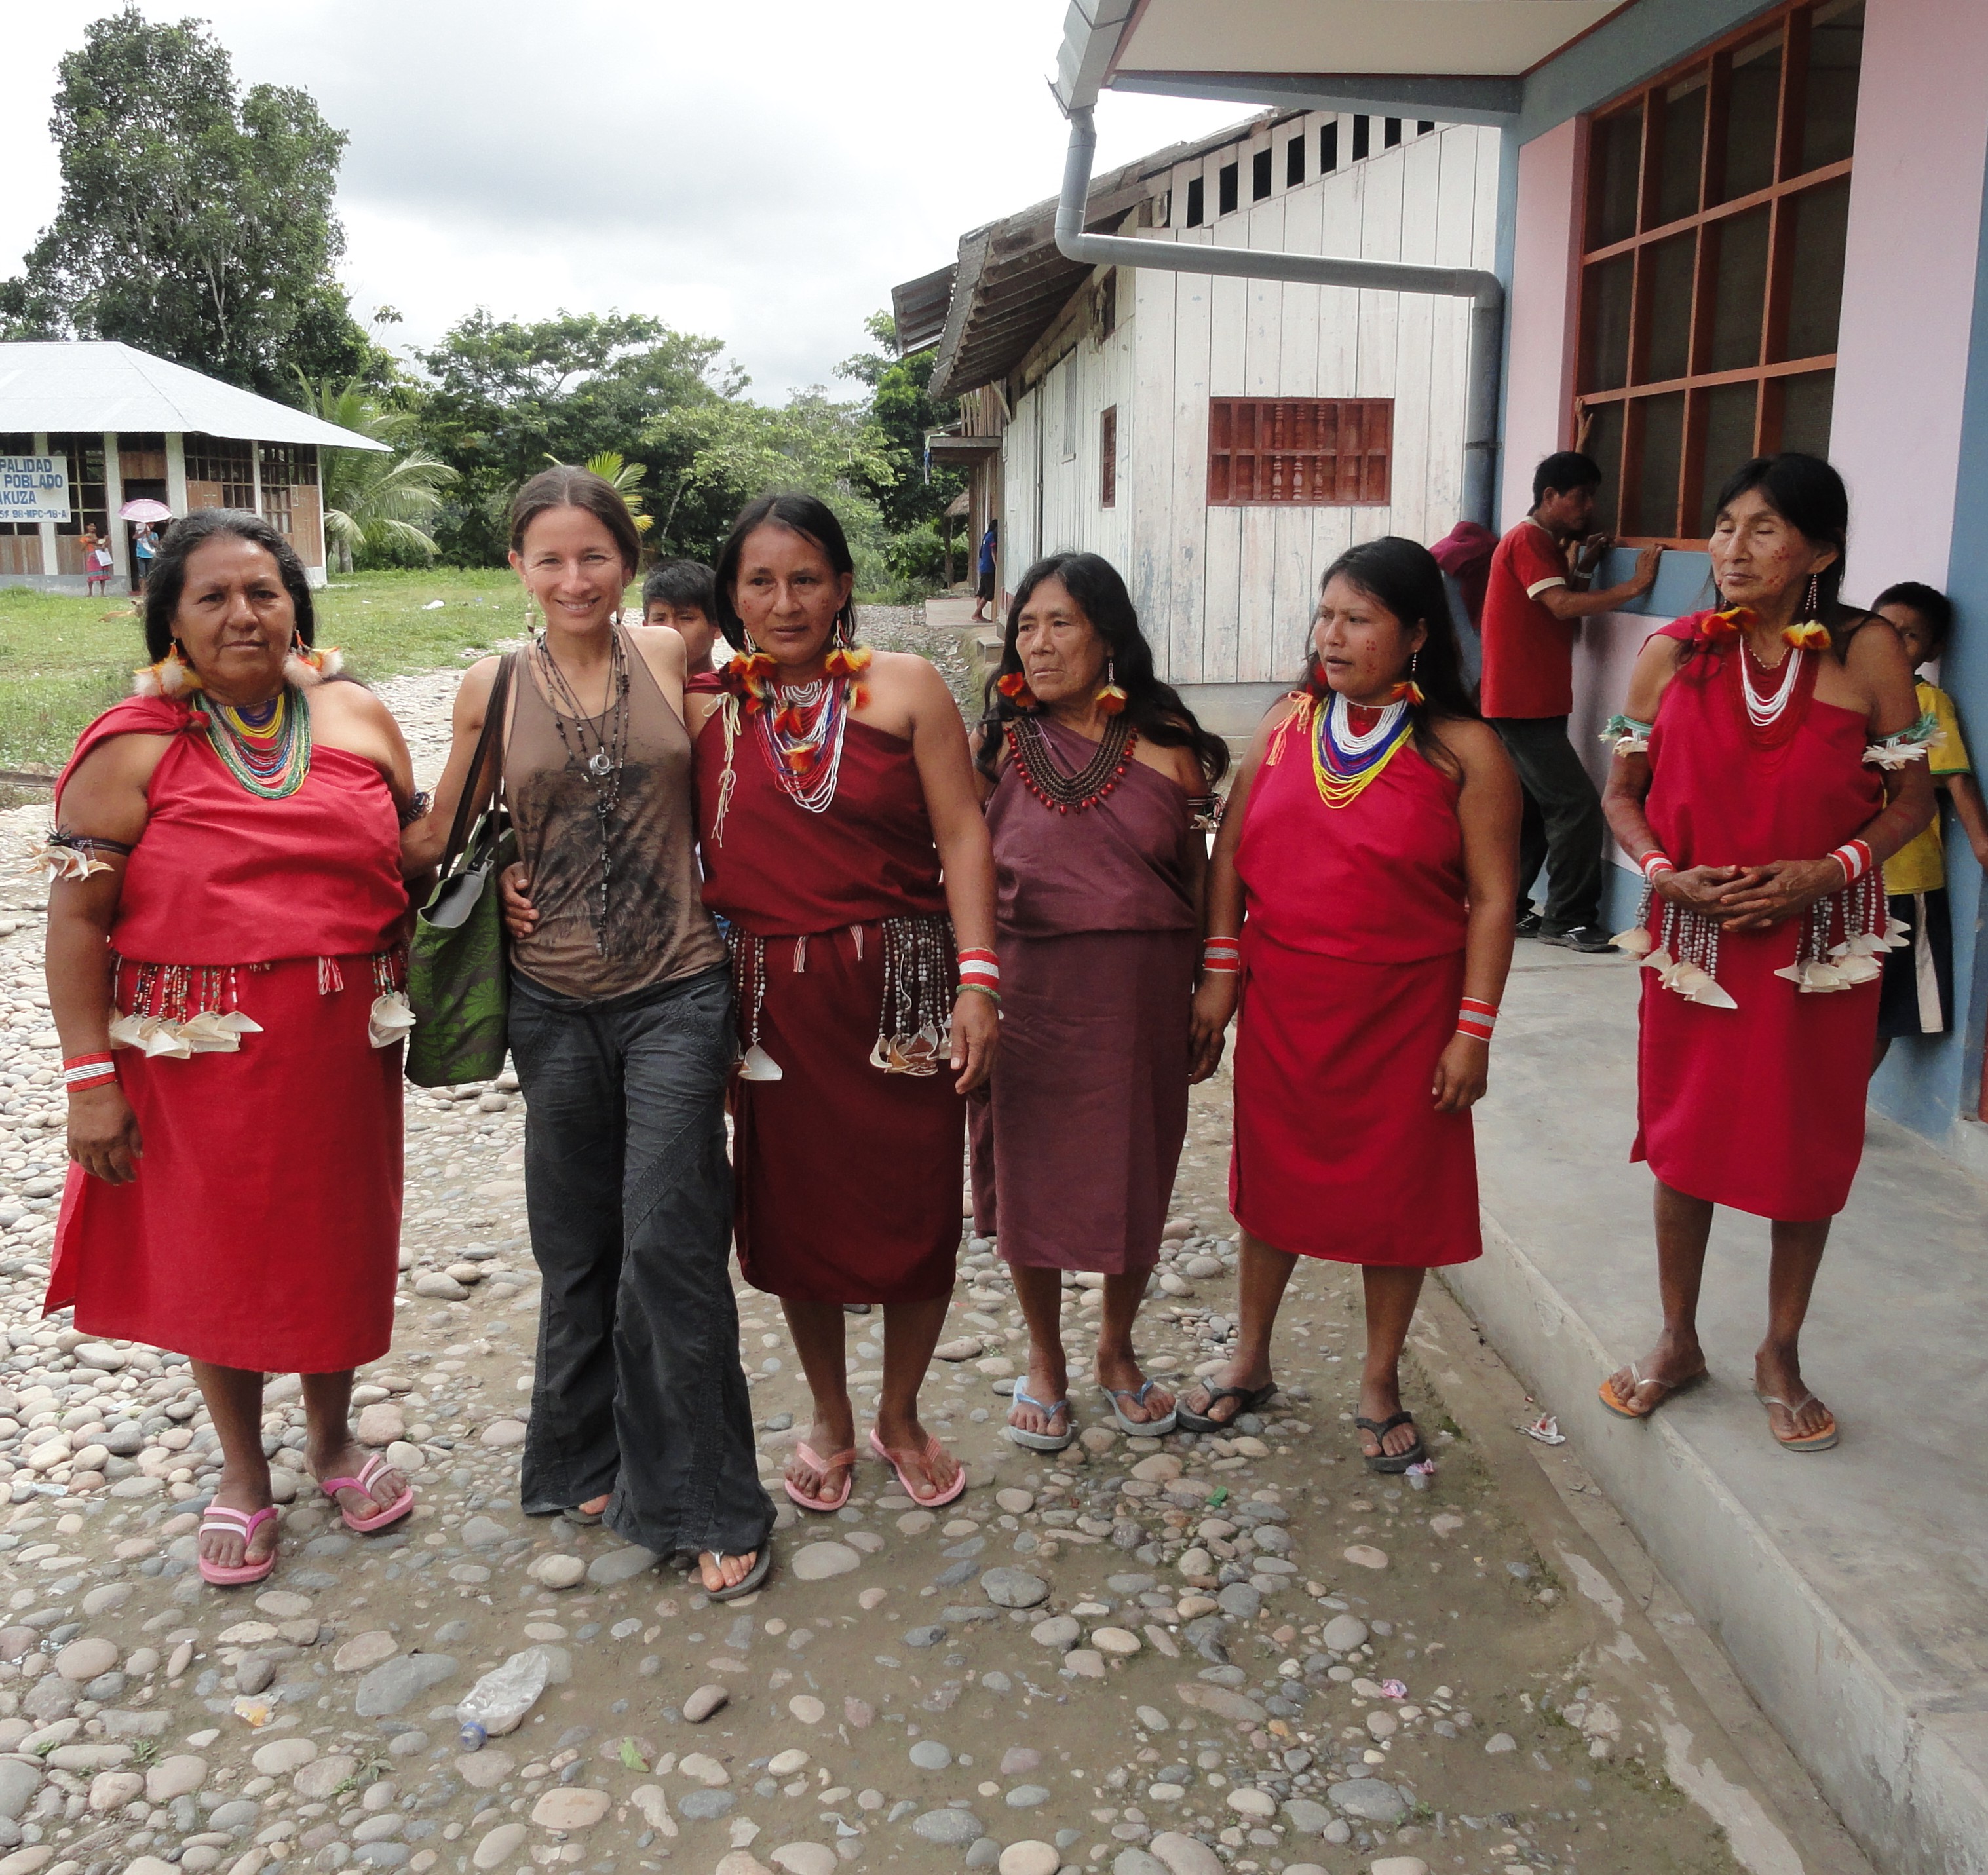 Violeta Villacorta with Awajun artisans in the Peruvian Amazon